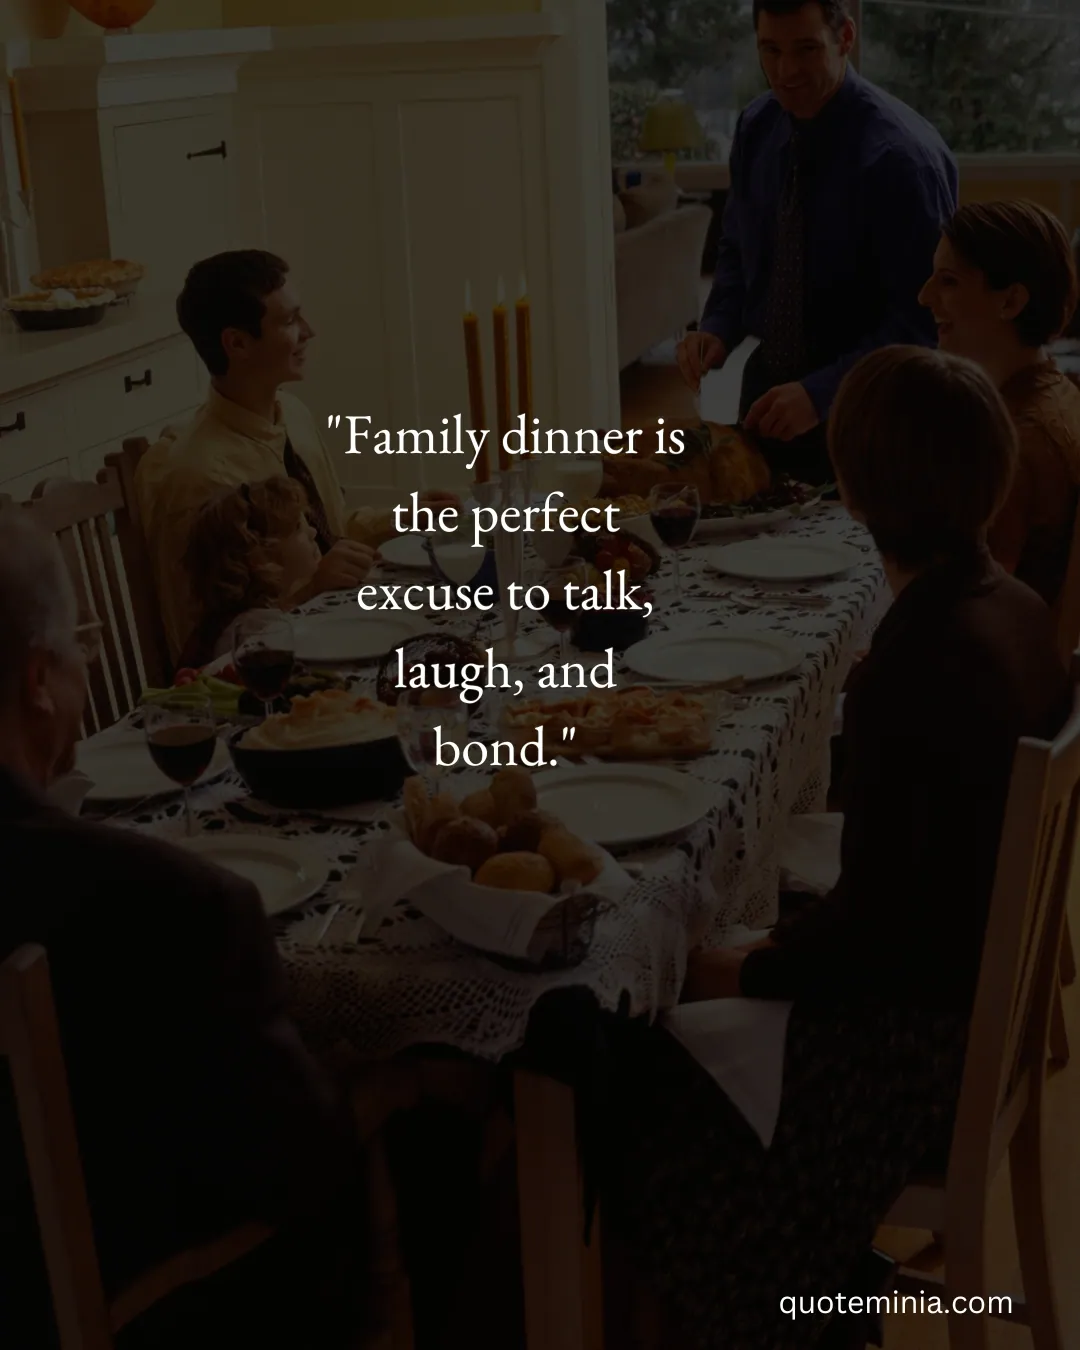 Family Dinner Quotes for Instagram 1